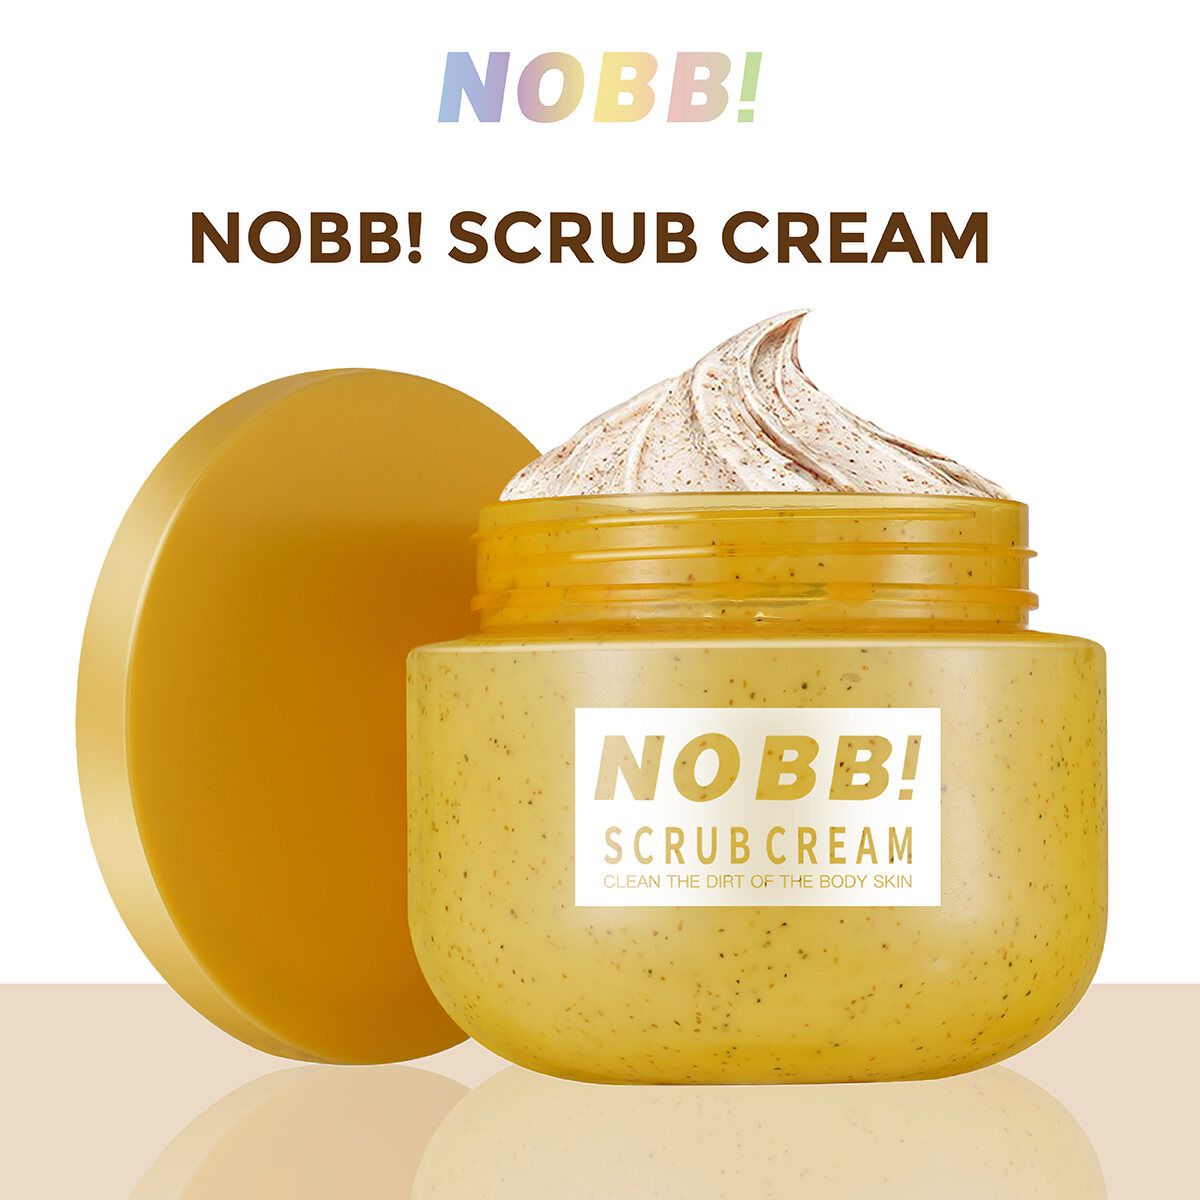 Rekomendasi Body Scrub Untuk Mencerahkan - NOBB! Scrub Cream for Body Exfoliating and Brightening